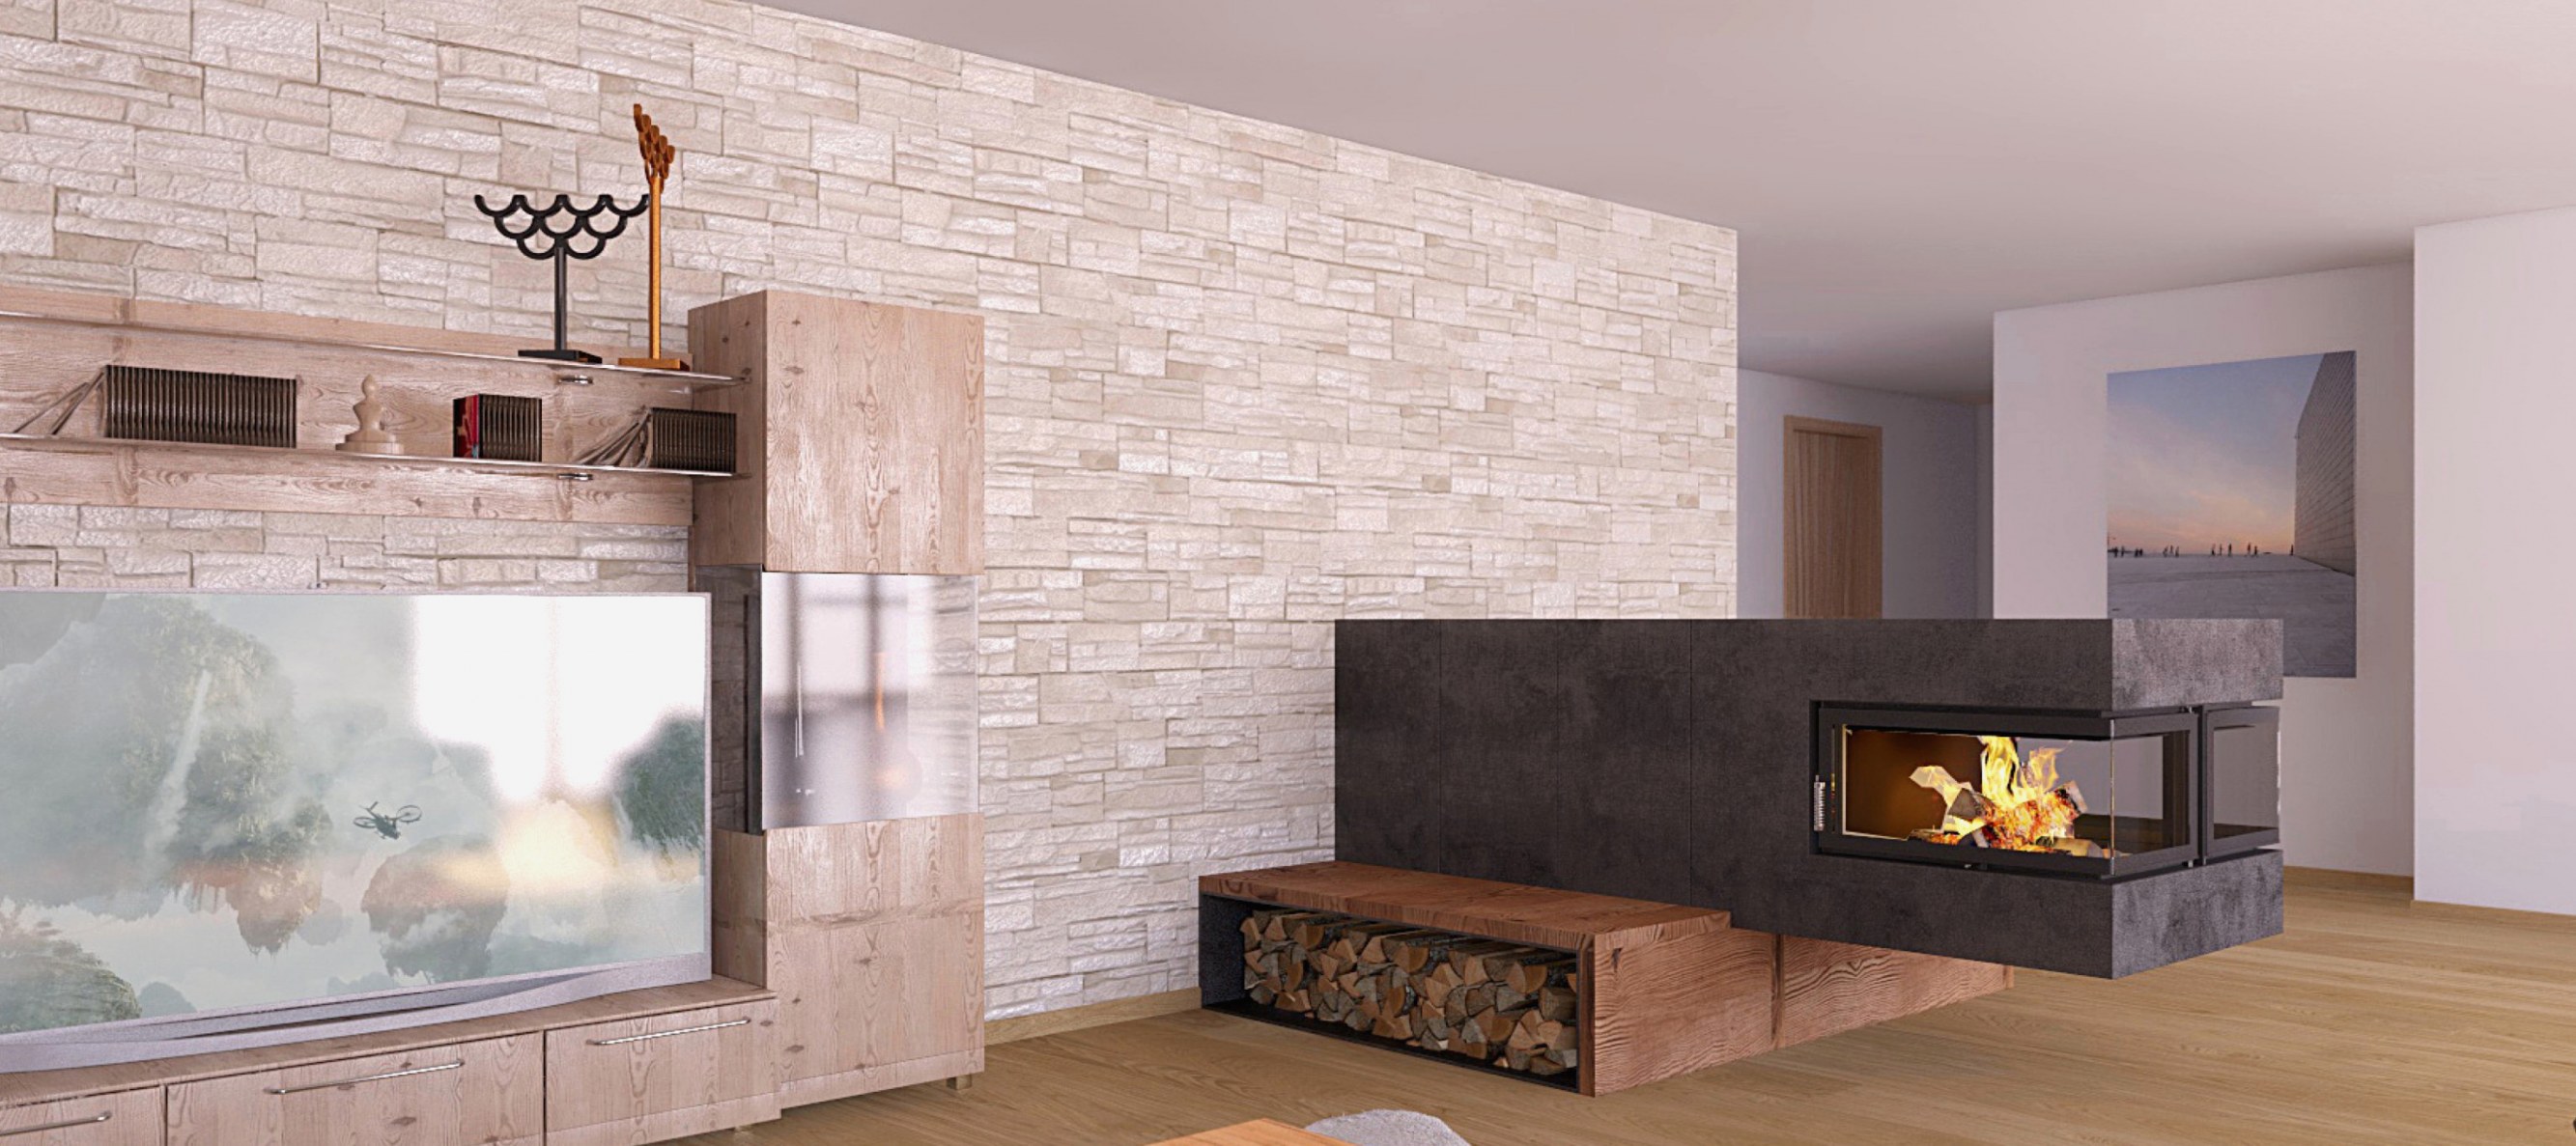 Fireplace Trends Luxury Corner Fireplace Designs Fake Stone Fireplace